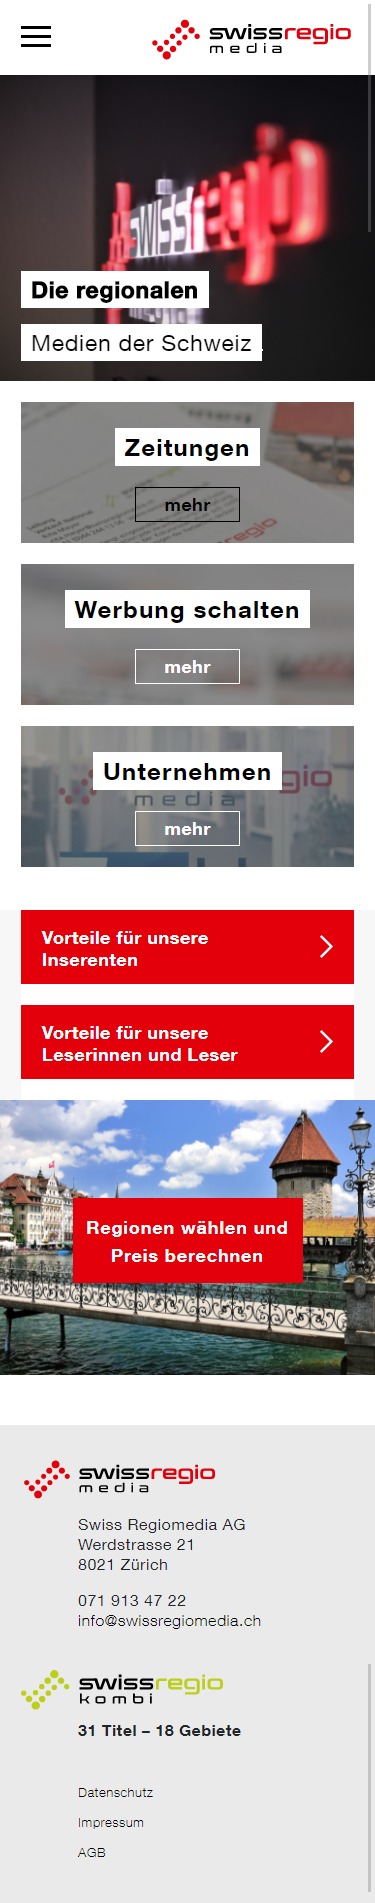 Swiss Regiomedia Mobile